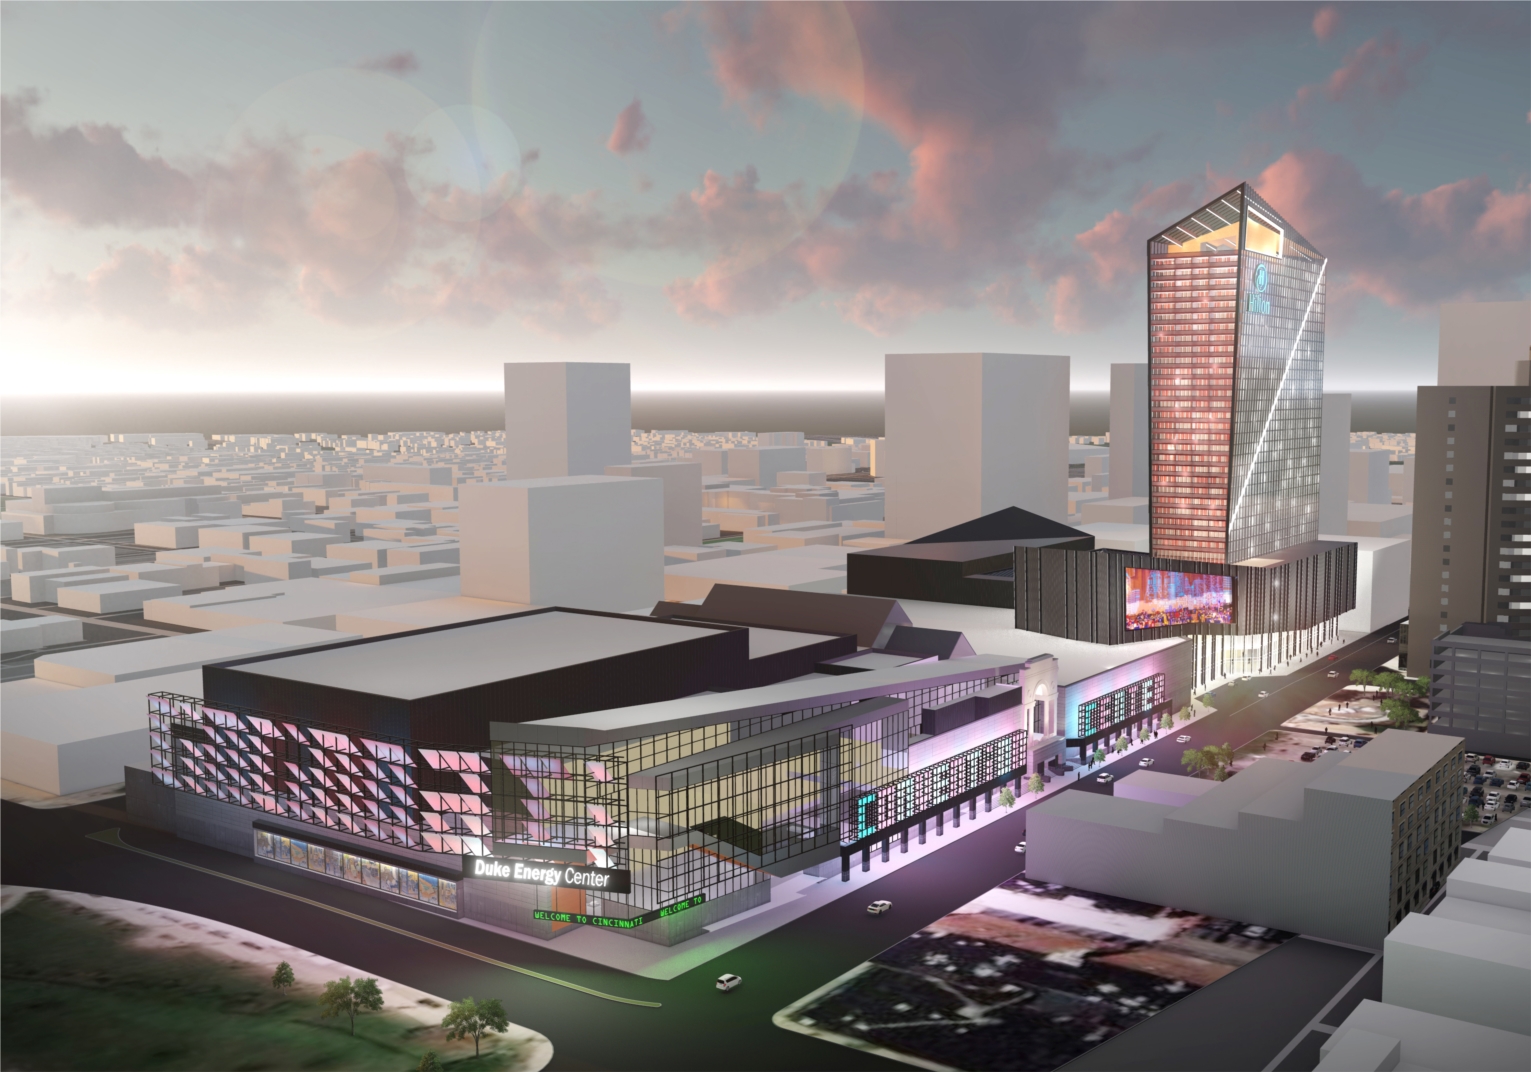 Renderings of the future Cincinnati Convention Center hotel, designed by Elevar.